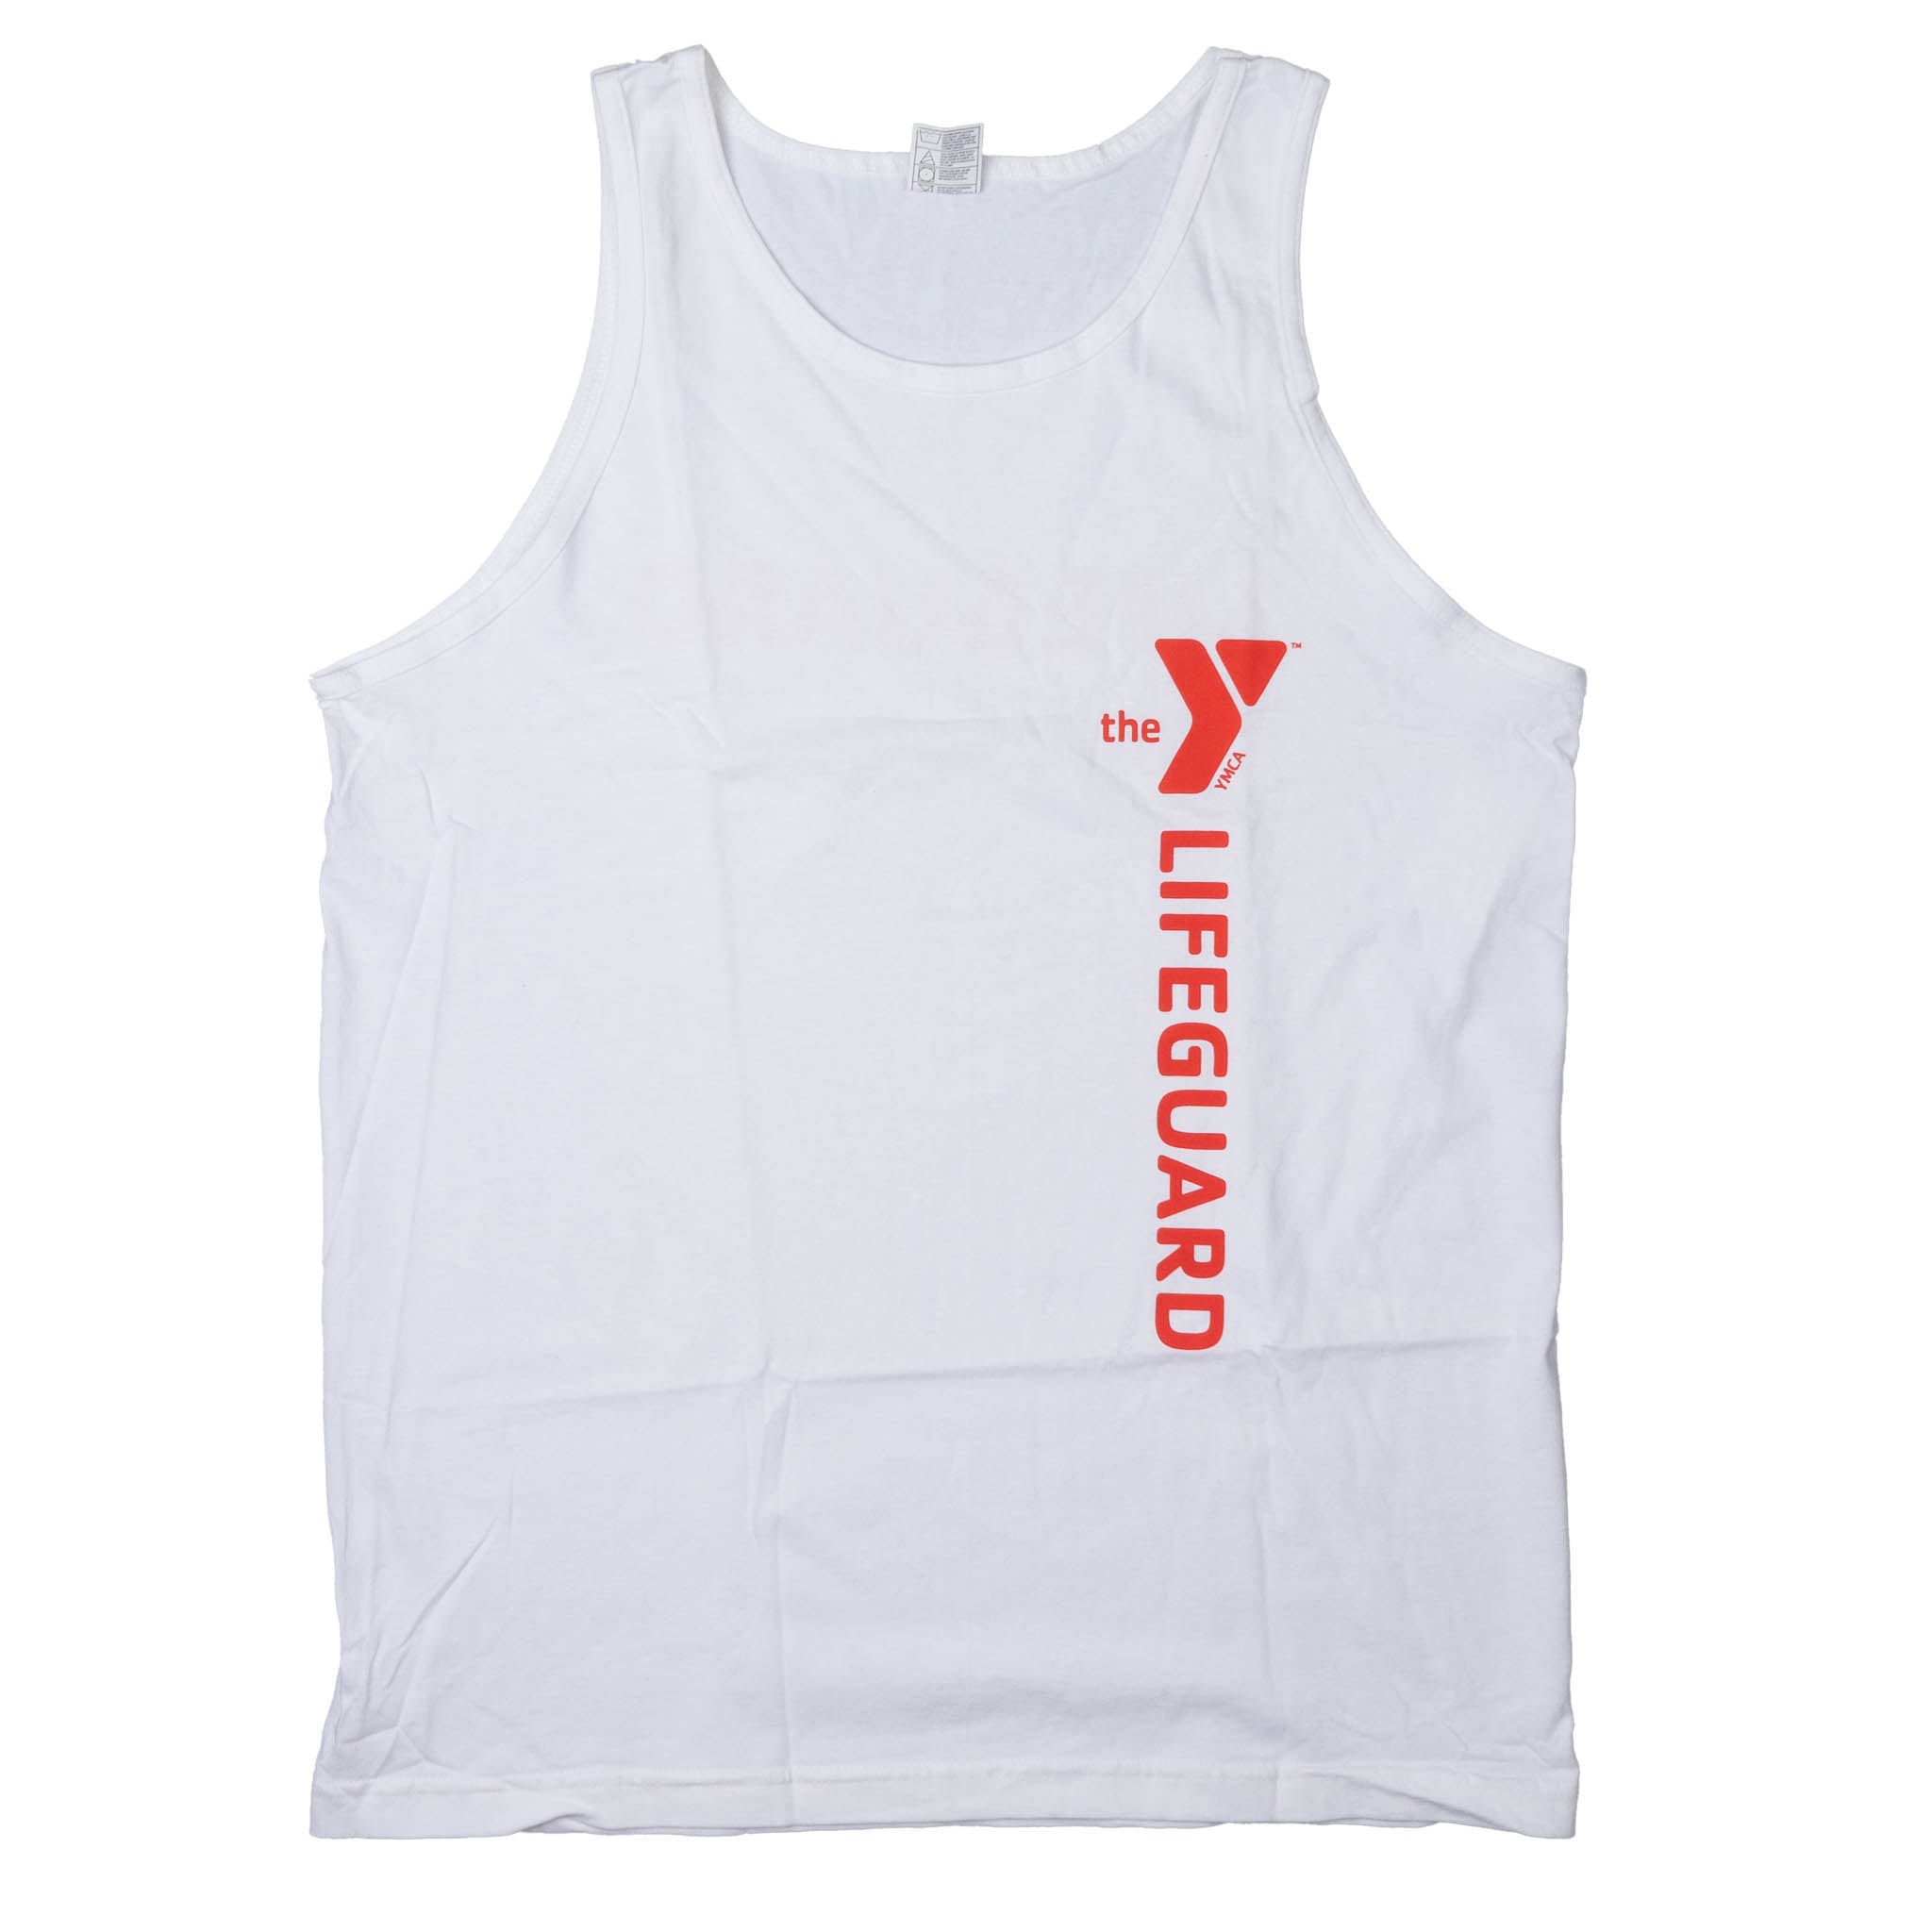 YMCA LIFE GUARD TANK TOP WHITE - YMLFGD02